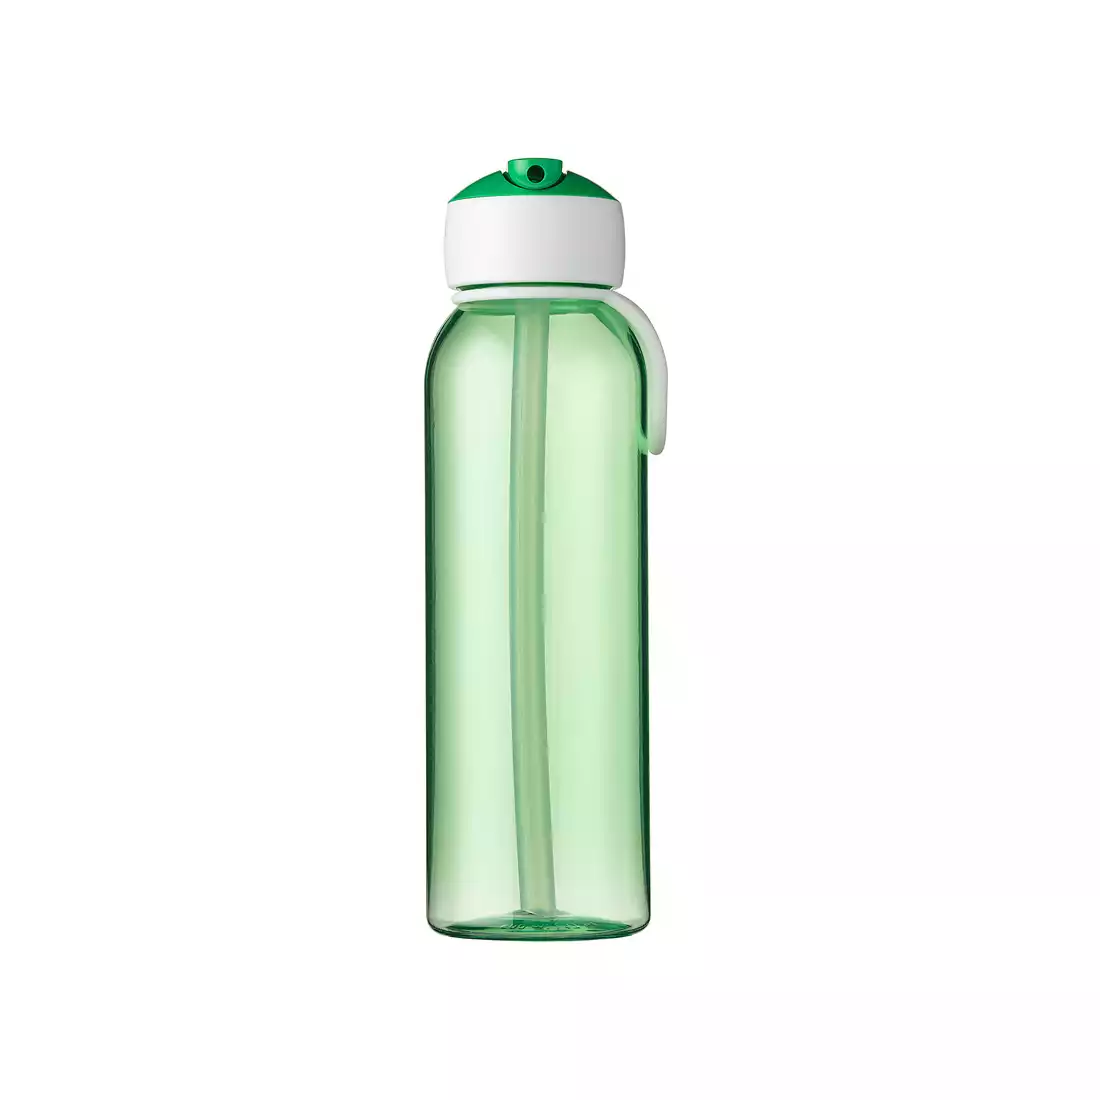 MEPAL FLIP-UP CAMPUS 500 ml water bottle, green